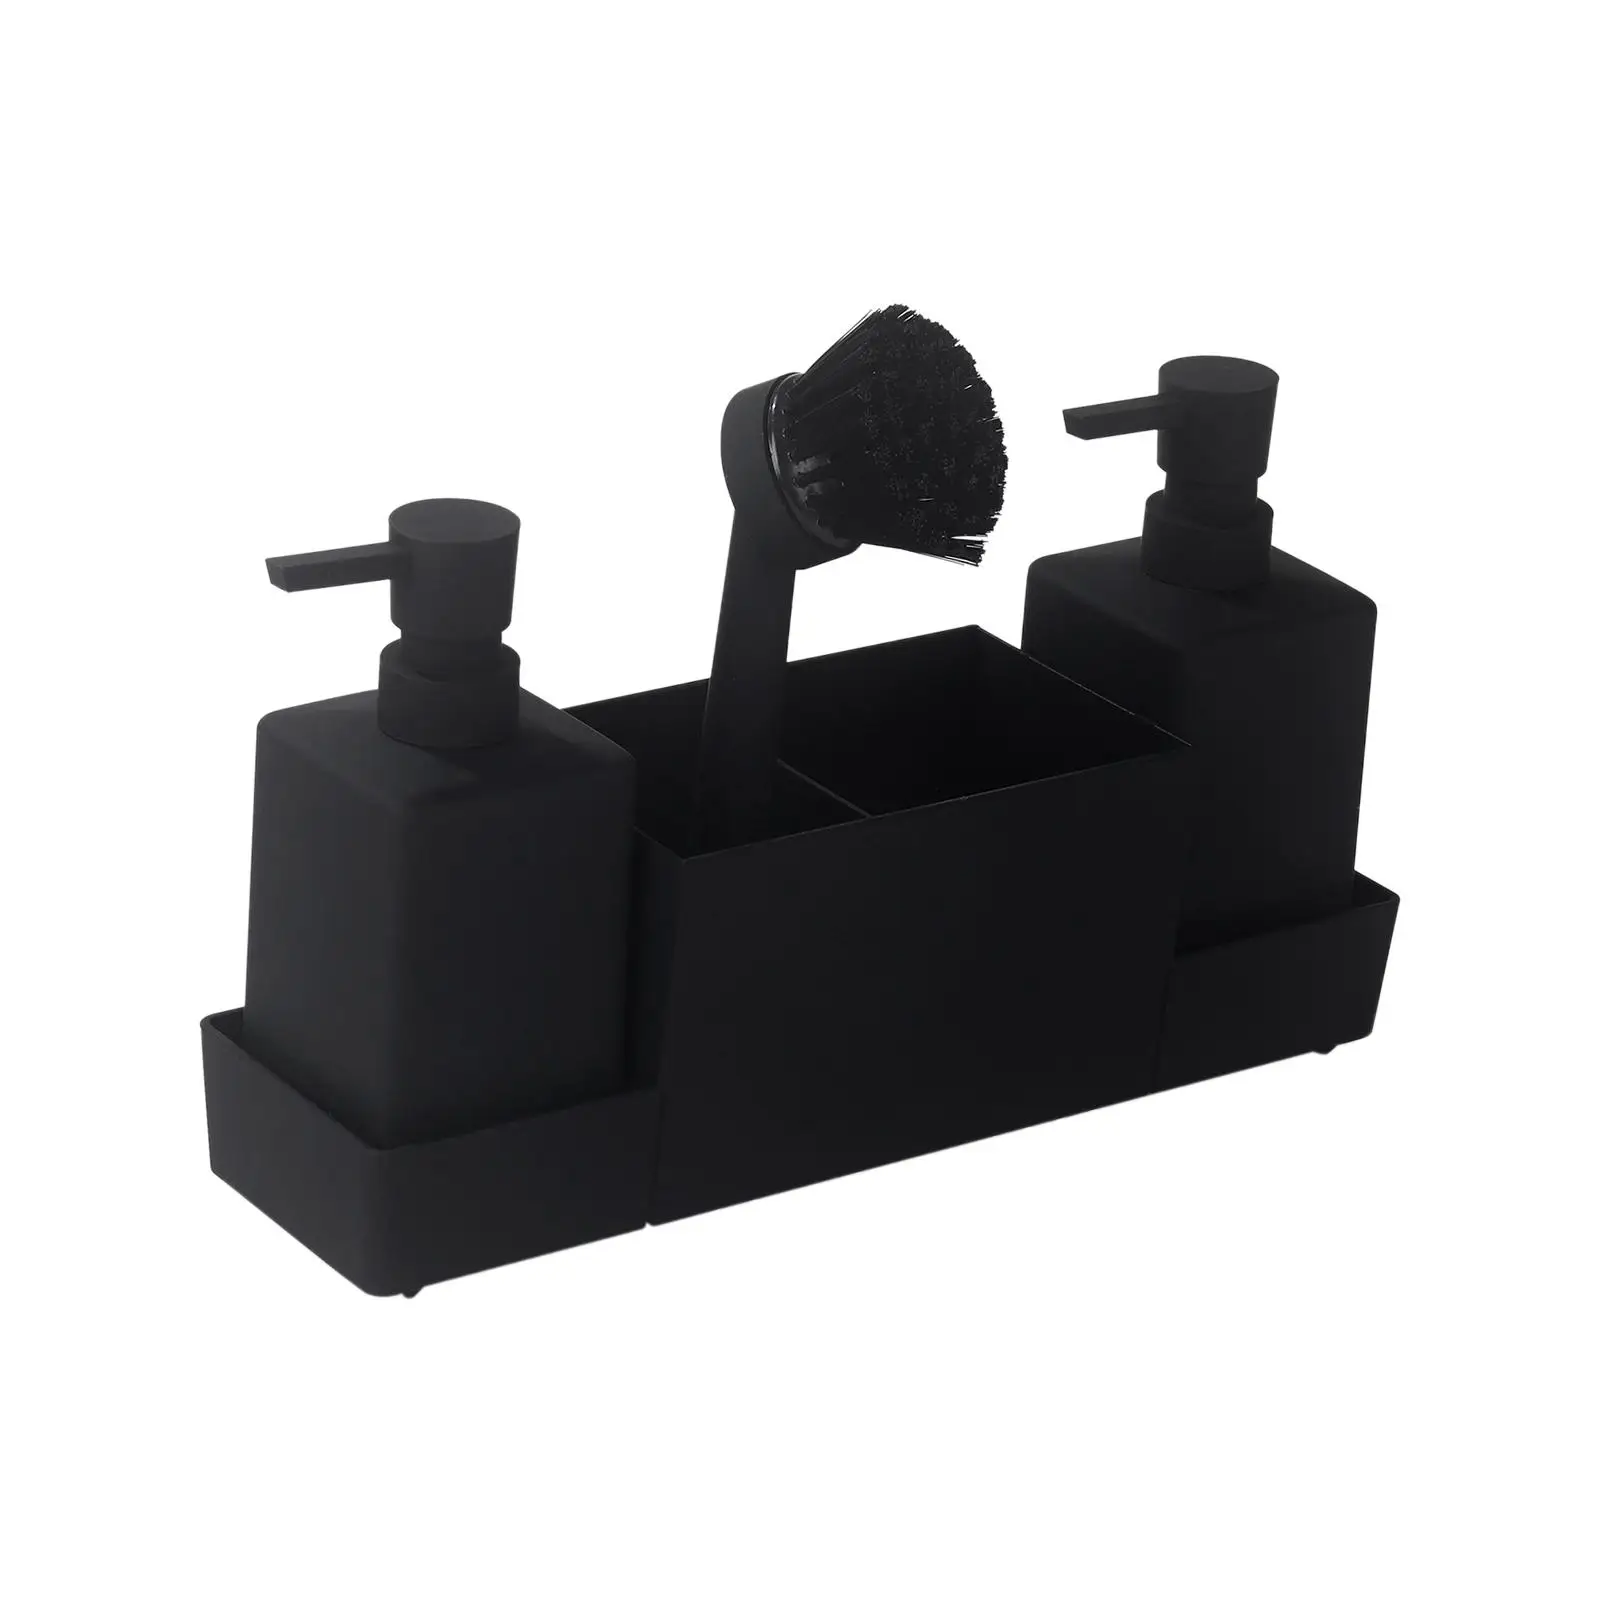 Sink Countertop Liquid Hand Soap Dispenser with Storage Tray for Sponges Scrubbers Non Slip Sink Caddy Organizer Pump Bottle